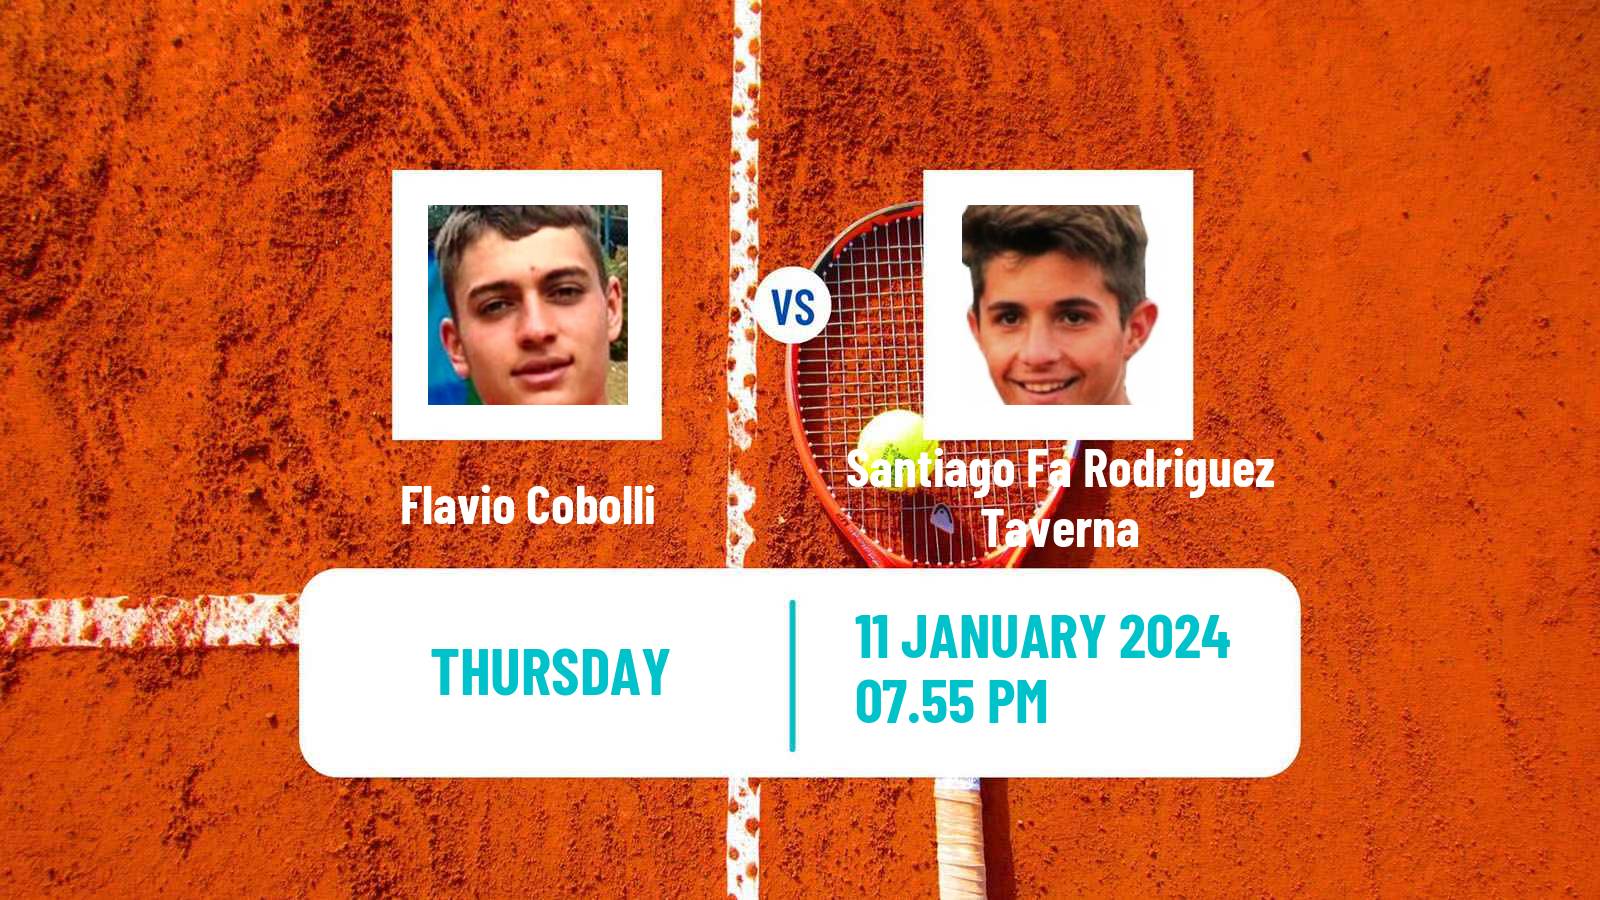 Tennis ATP Australian Open Flavio Cobolli - Santiago Fa Rodriguez Taverna